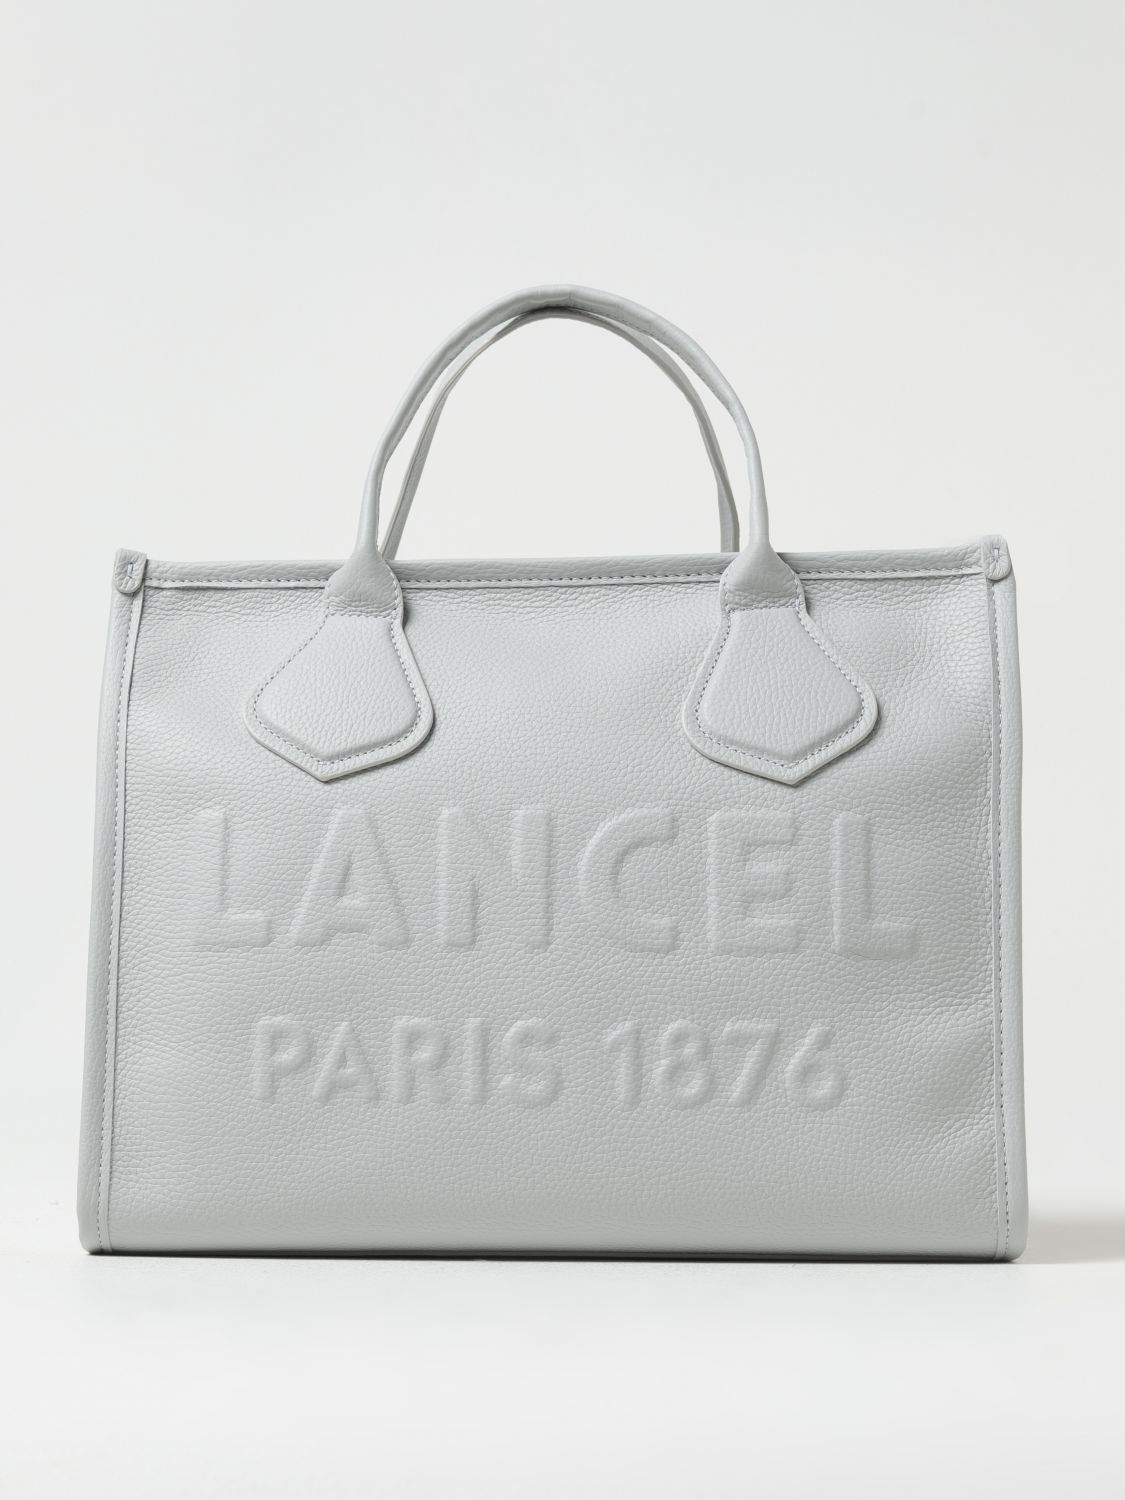 Lancel Handbag LANCEL Woman colour White